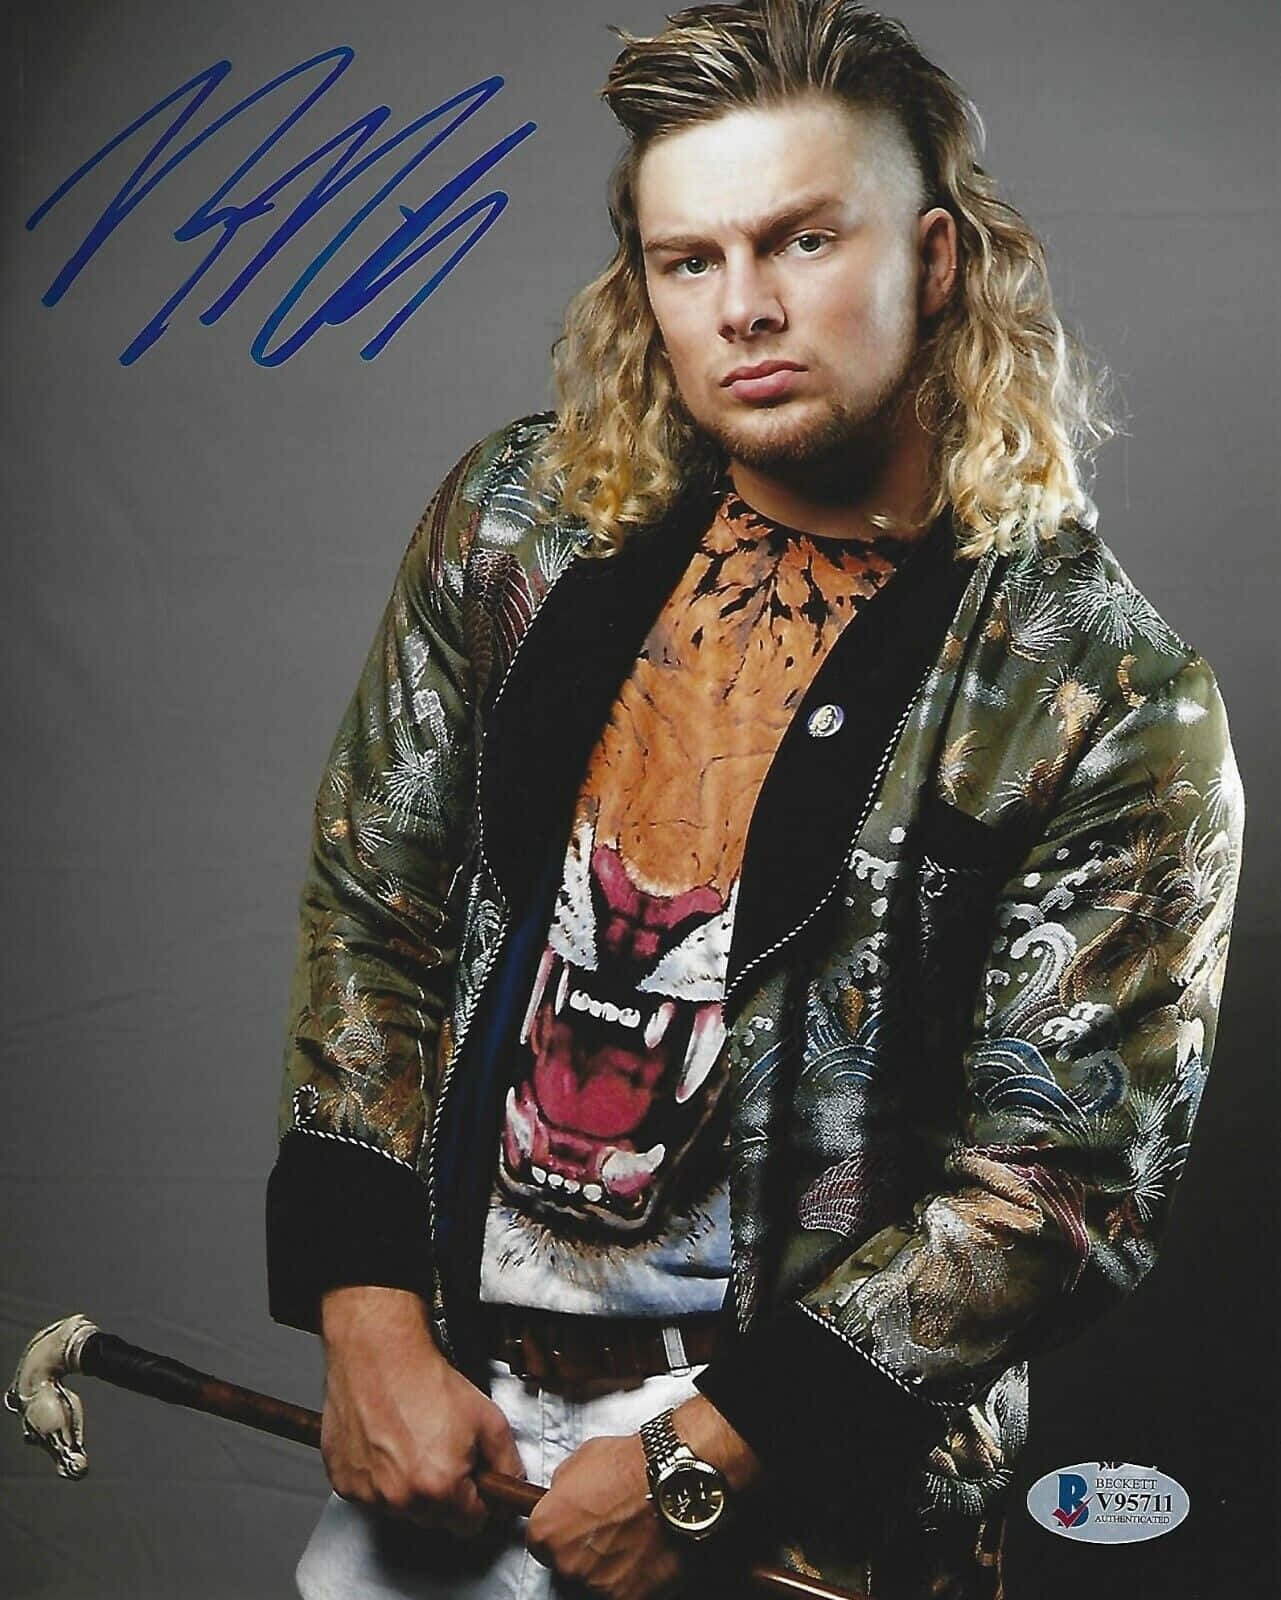 Autograf fotografi af wrestler Brian Pillman Wallpaper